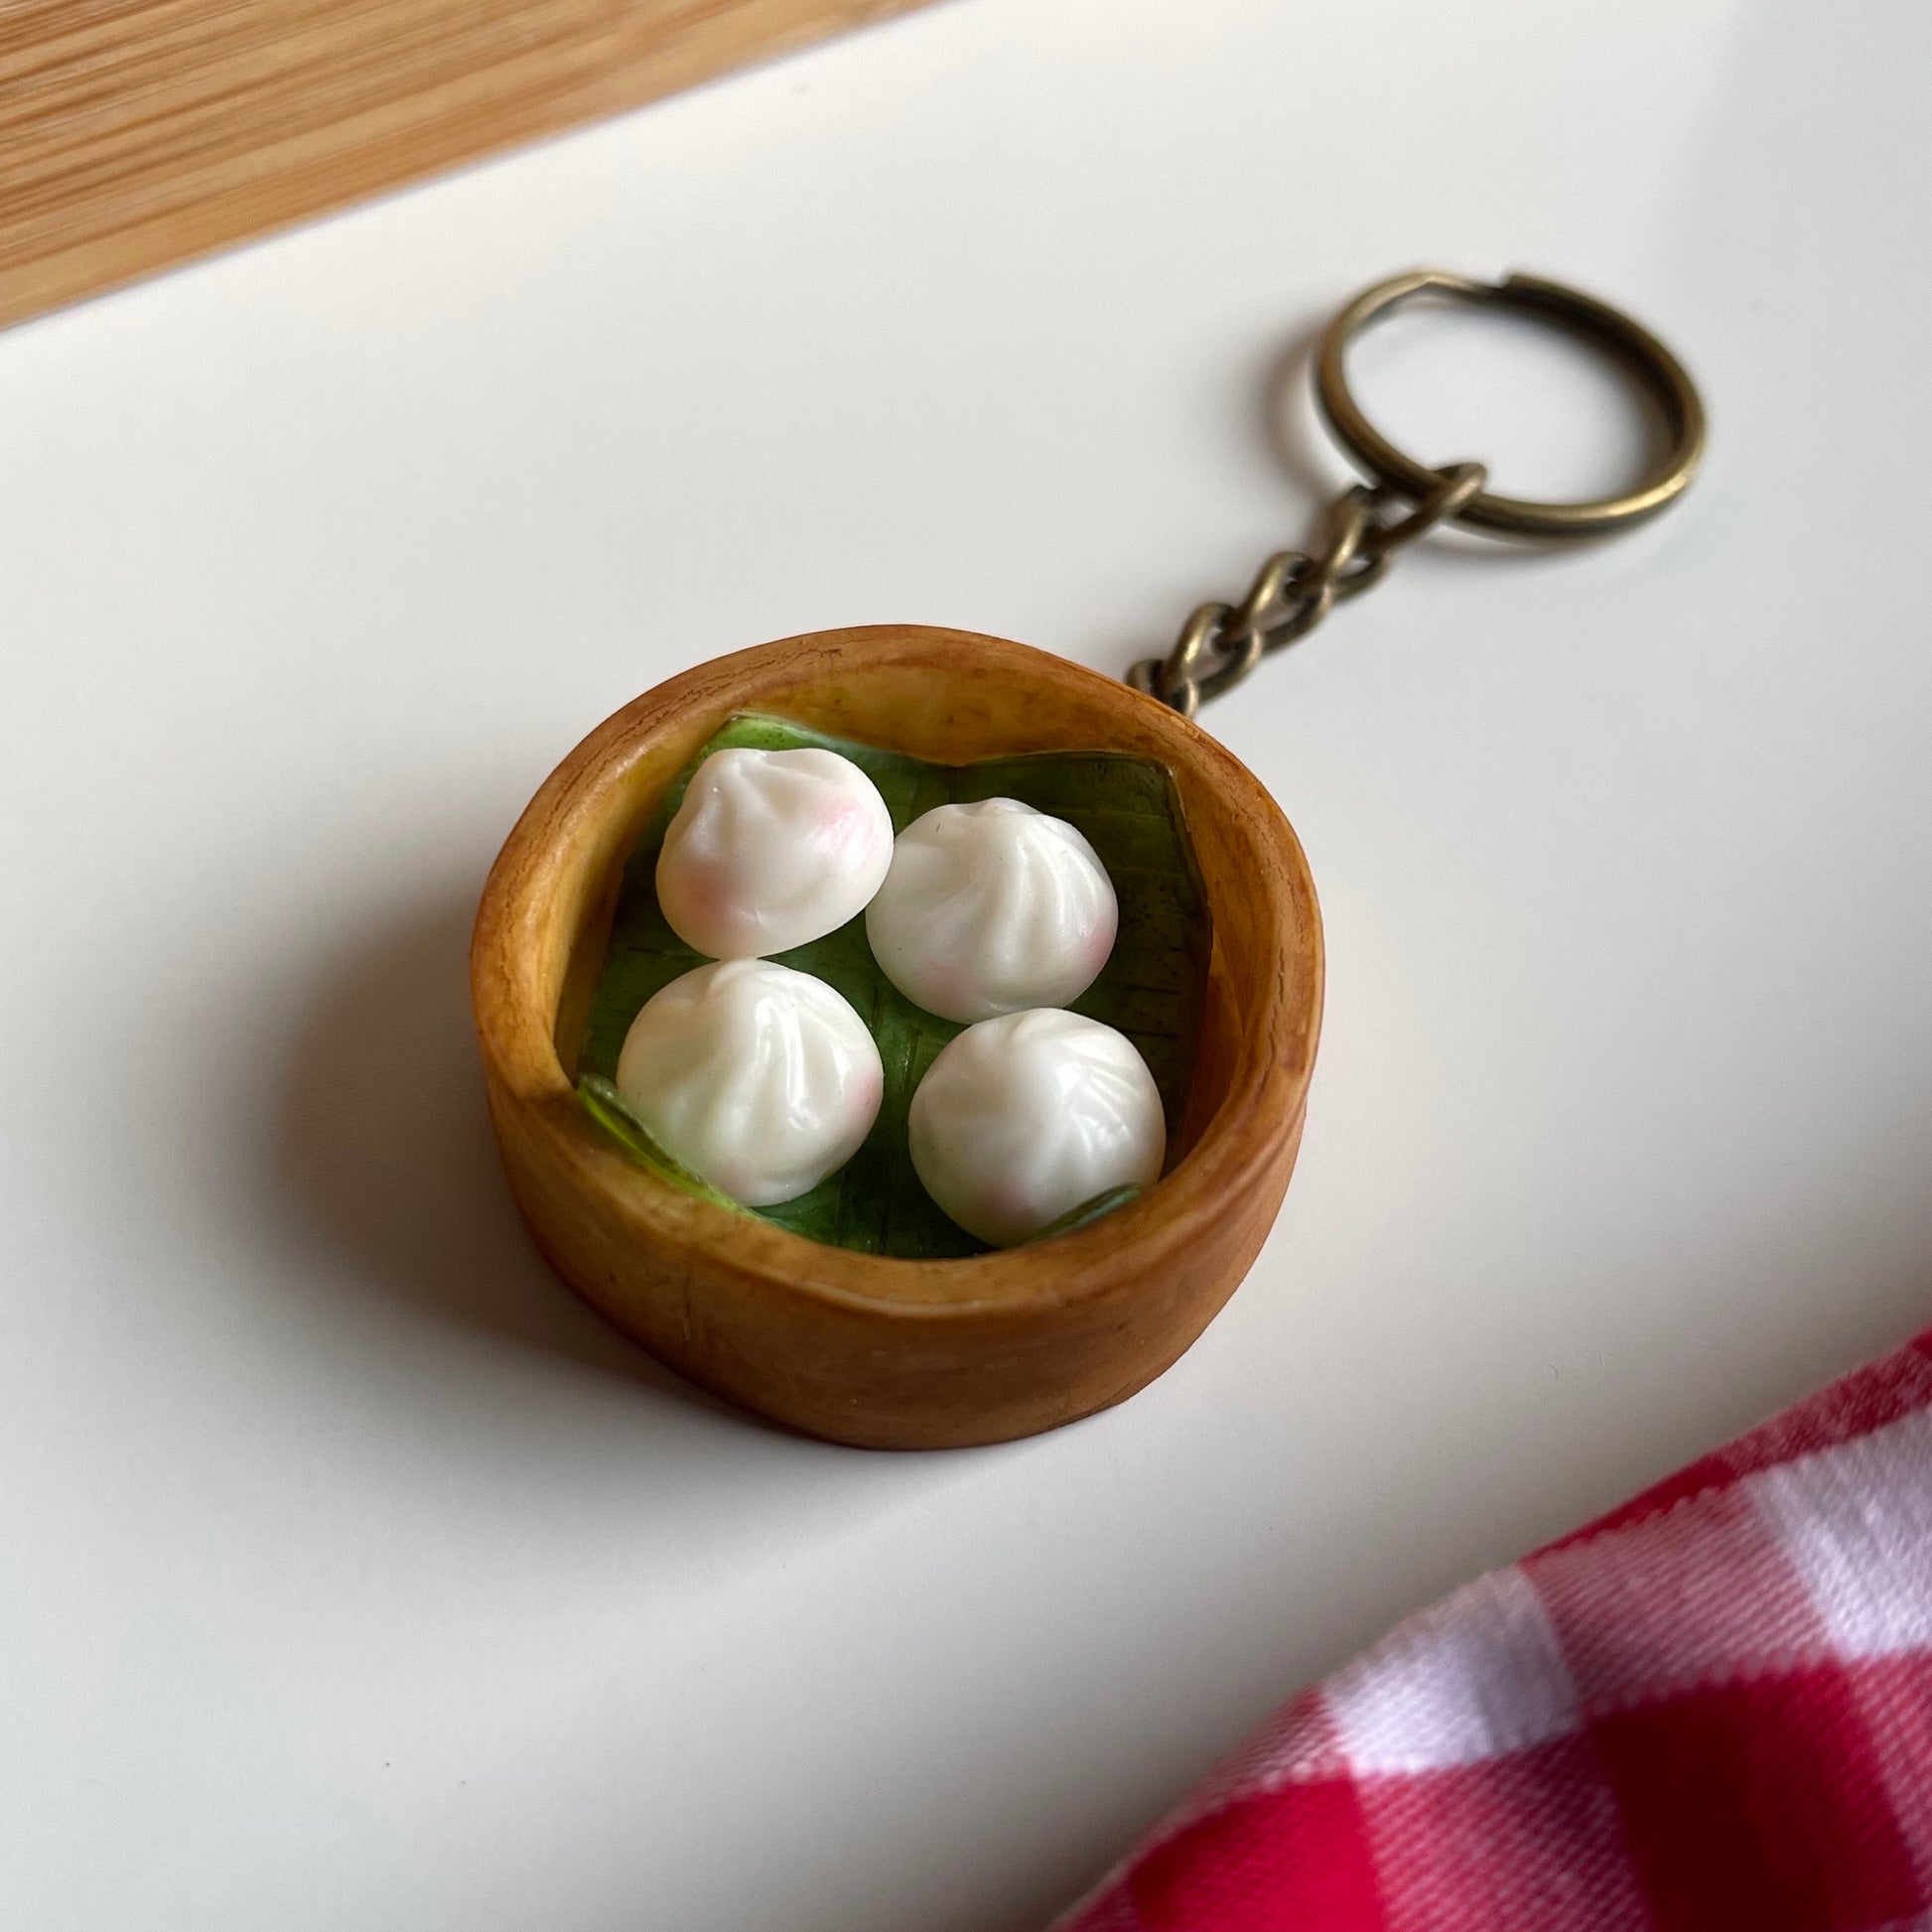 Cute dumplings keychain, bao charm, dumplings keyring, bao basket, cute novelty keychain, polymerclay charm, realistic food, miniature food